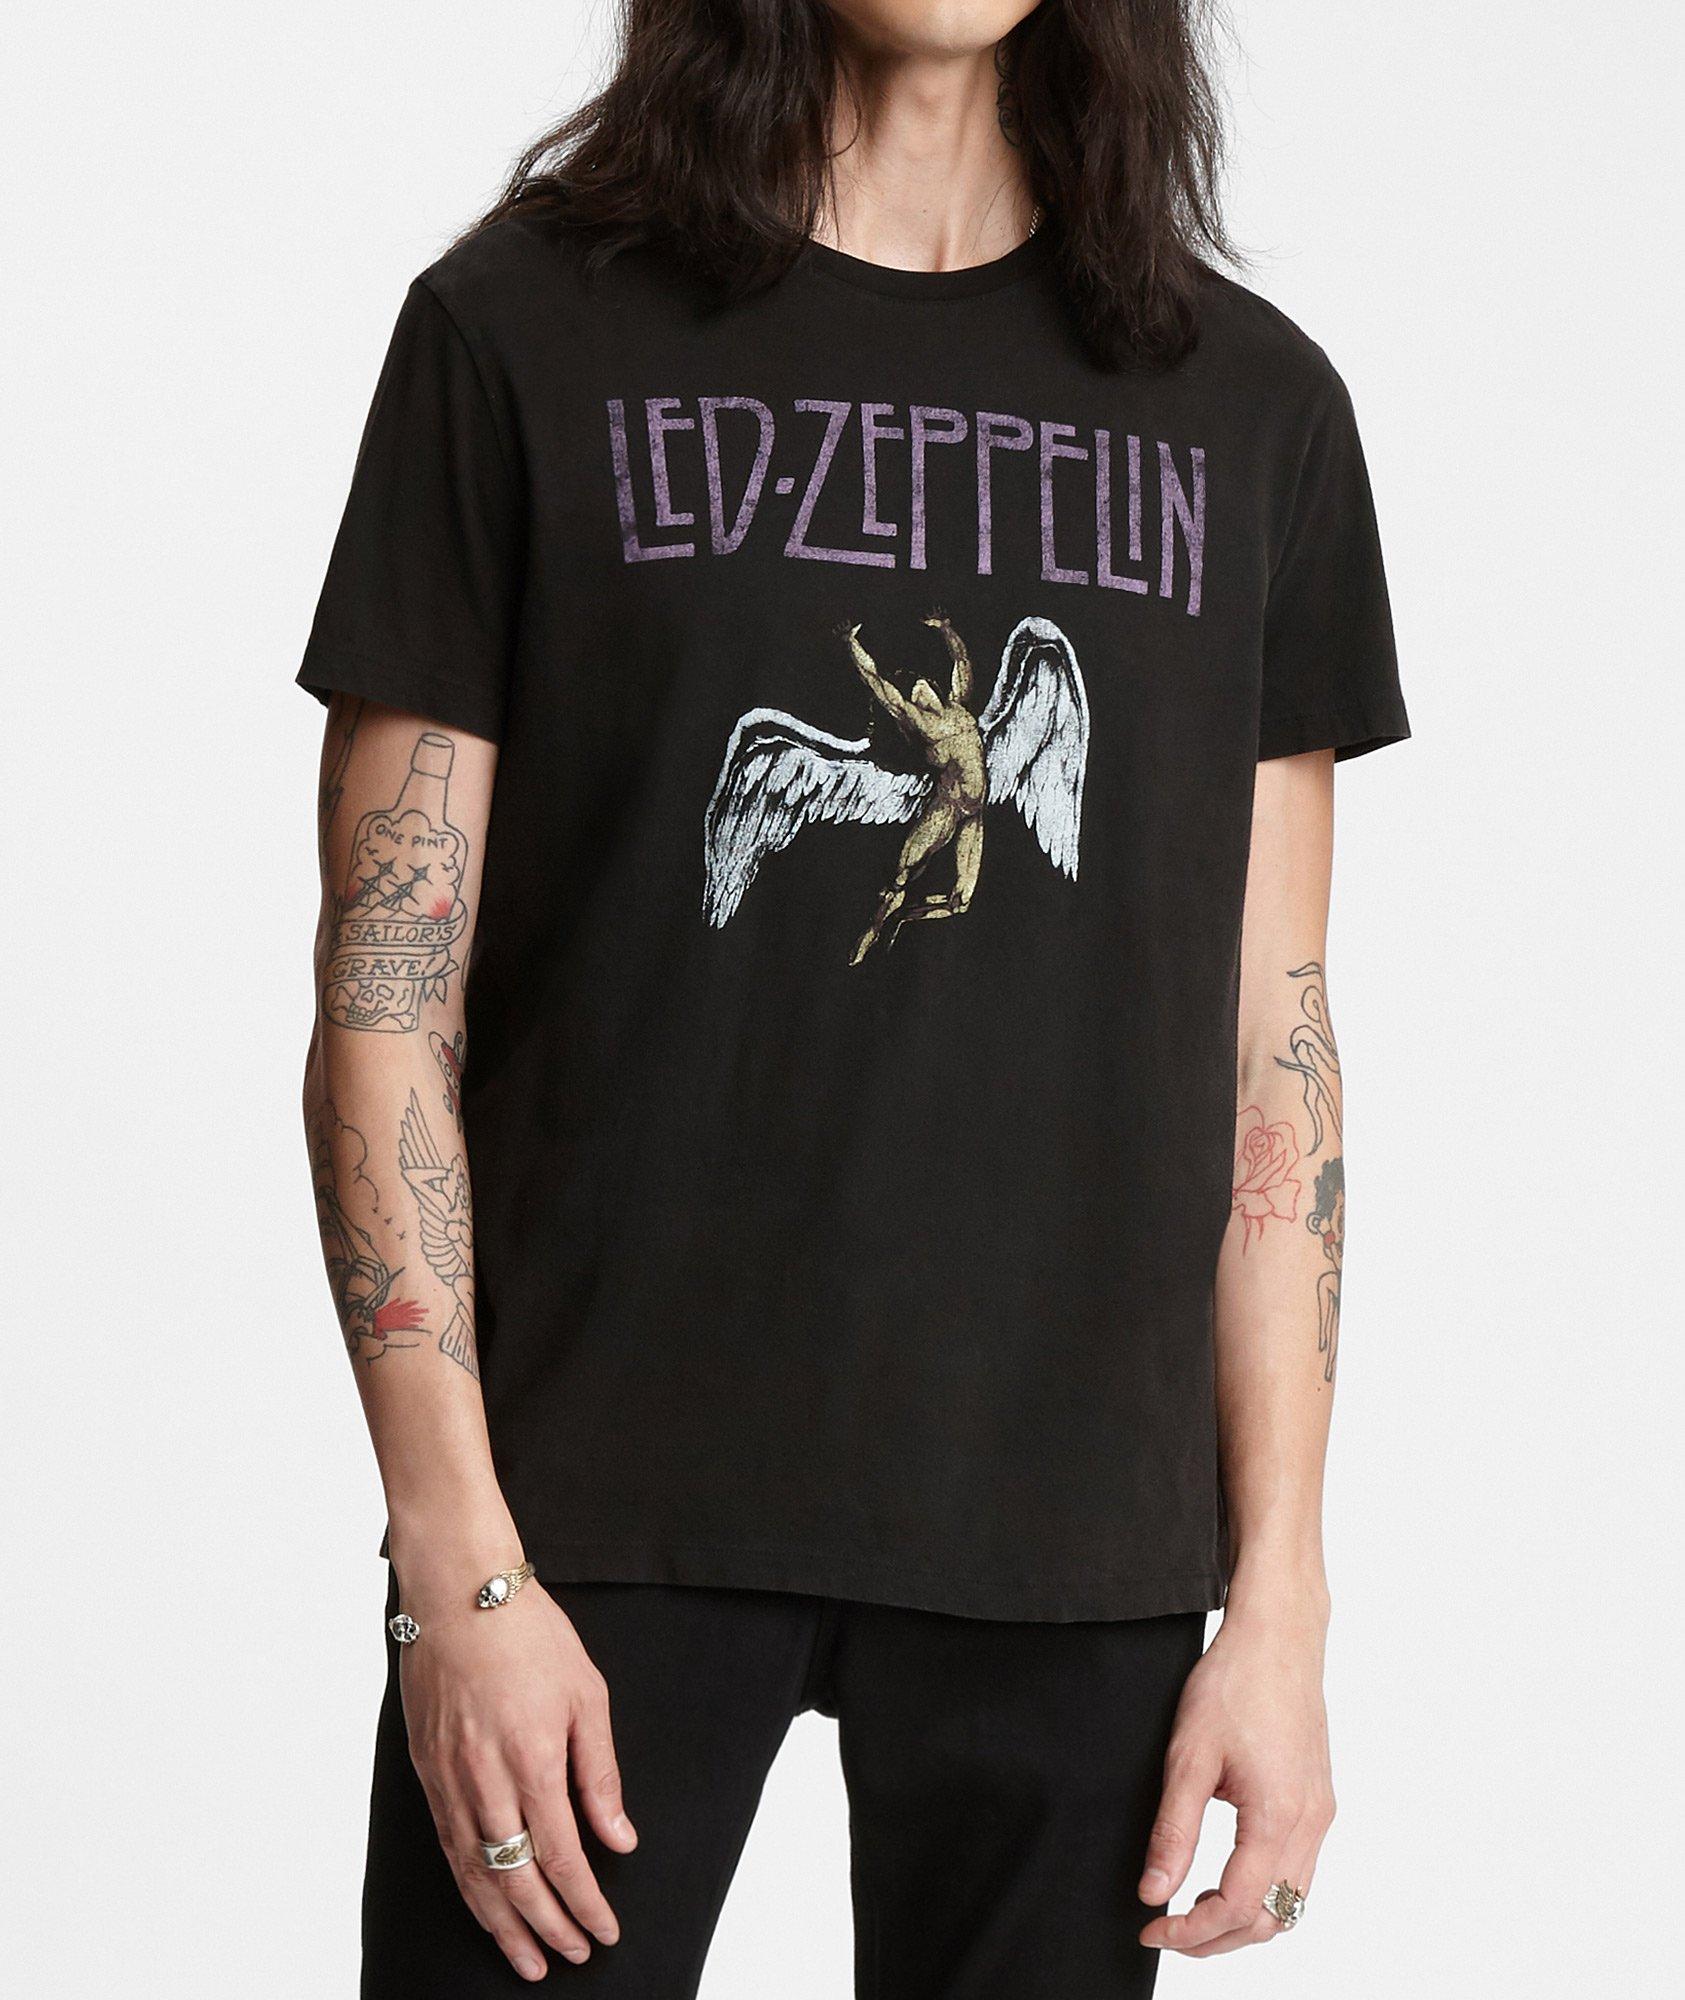 T-shirt Swan Song de Led Zeppelin image 0